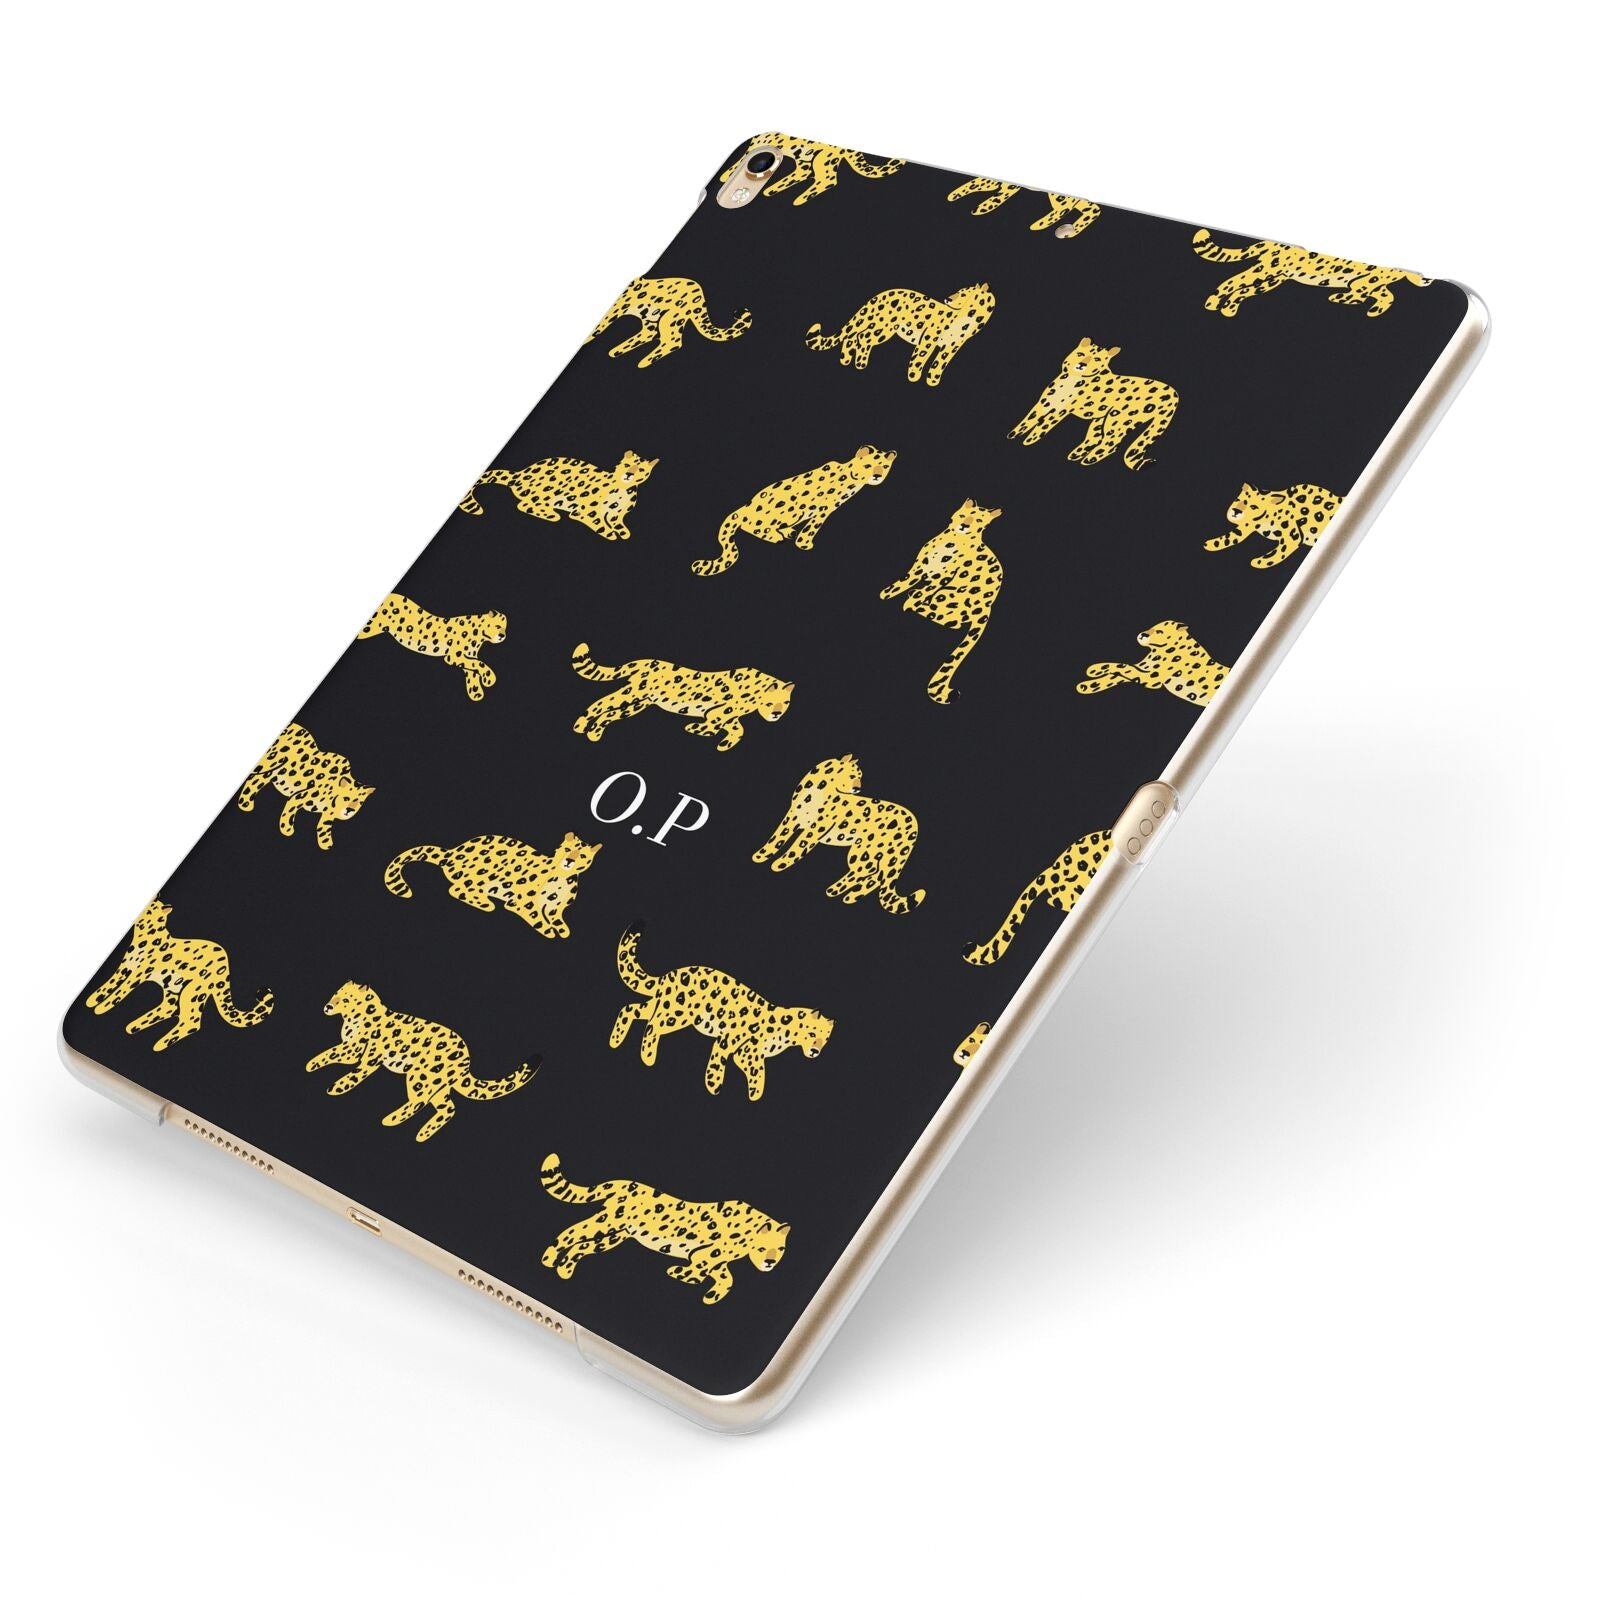 Prowling Leopard Apple iPad Case on Gold iPad Side View